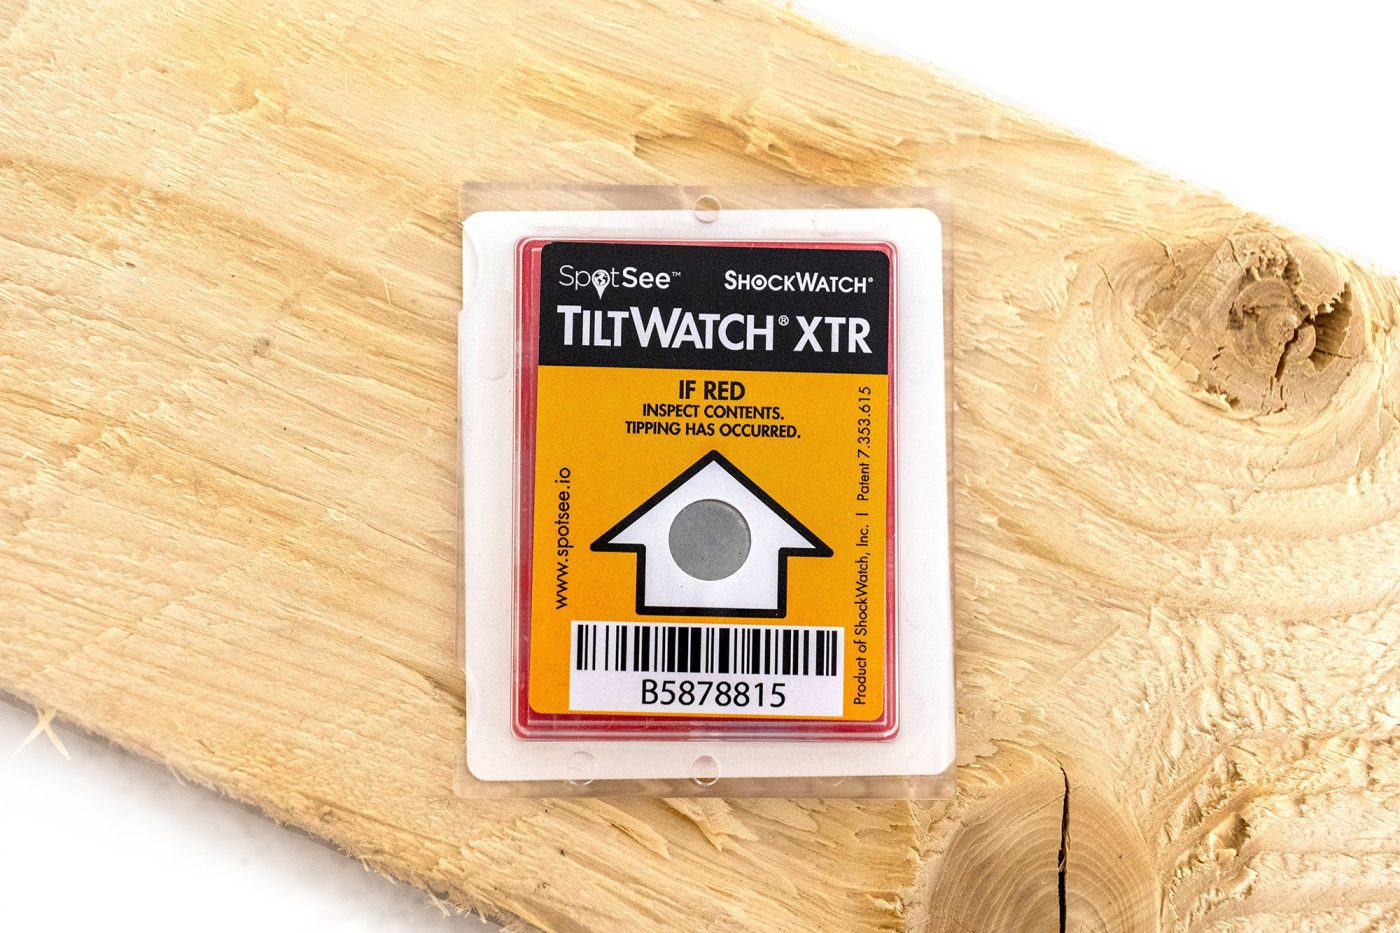 Shockwatch® Tiltwatch XTR® Indicators & Labels. Box sets (Including Companion Shipping Labels) Valdamarkdirect.com